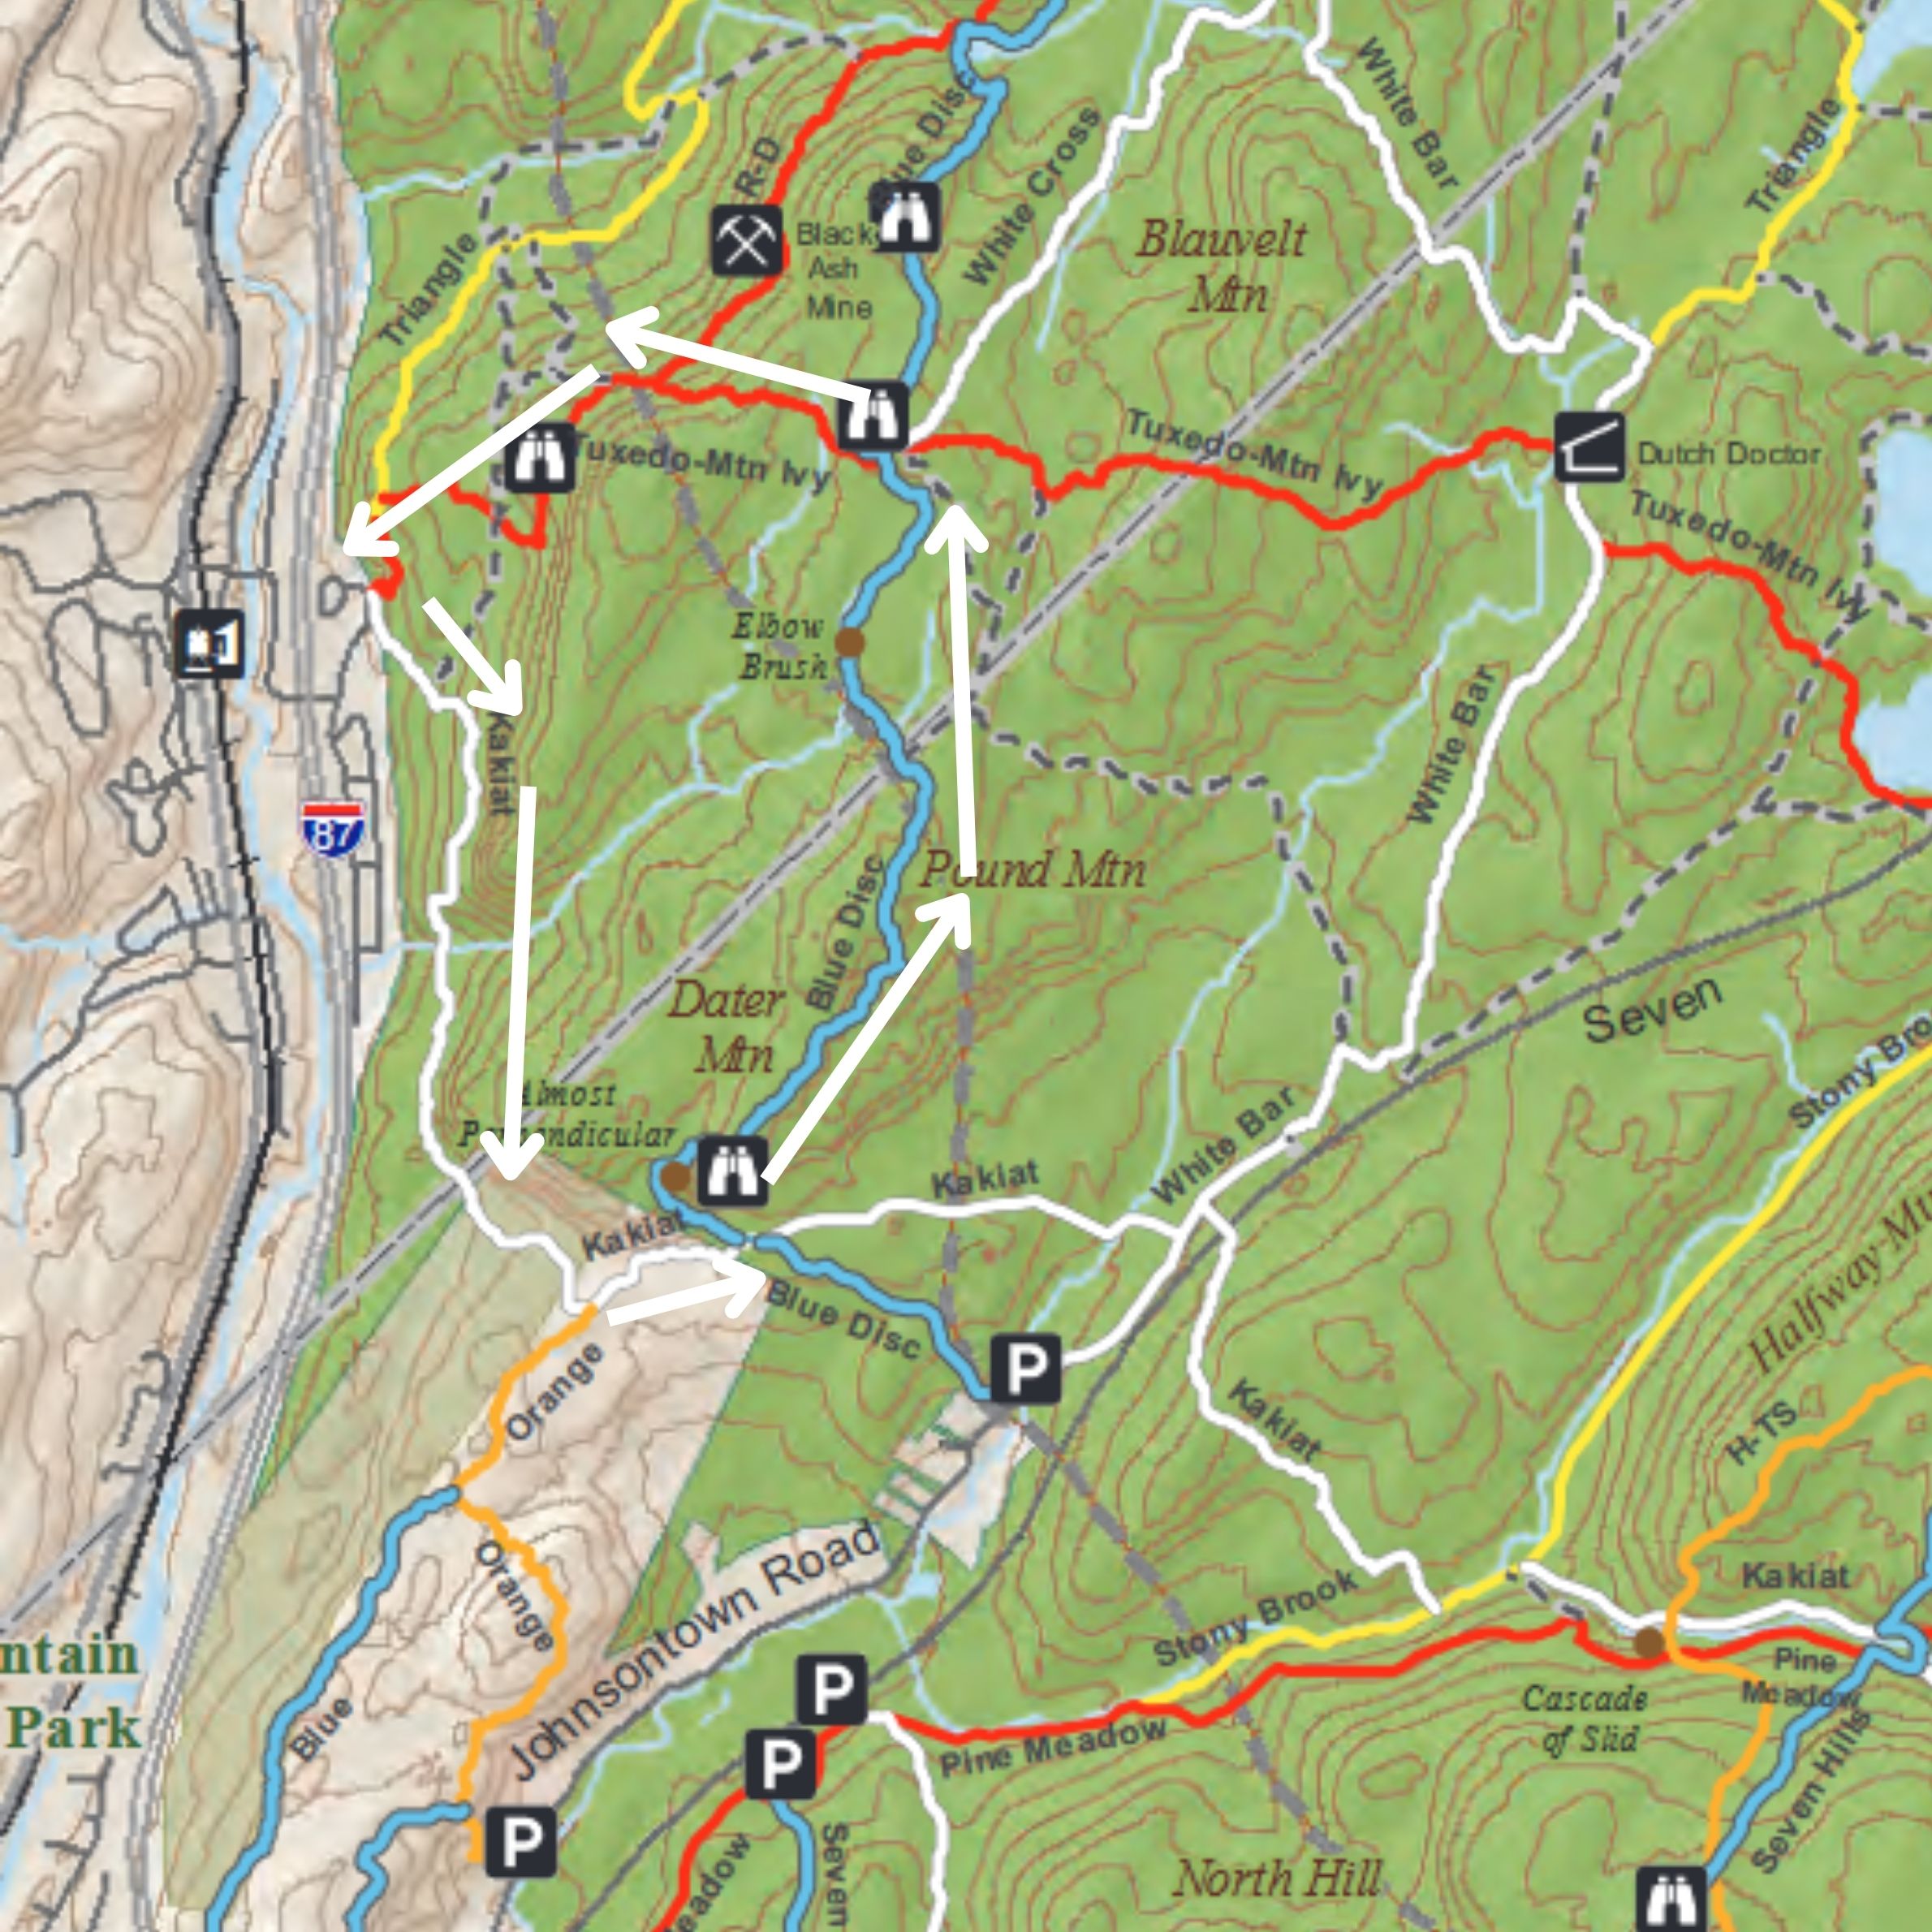 kakiat trail western side loop option 03